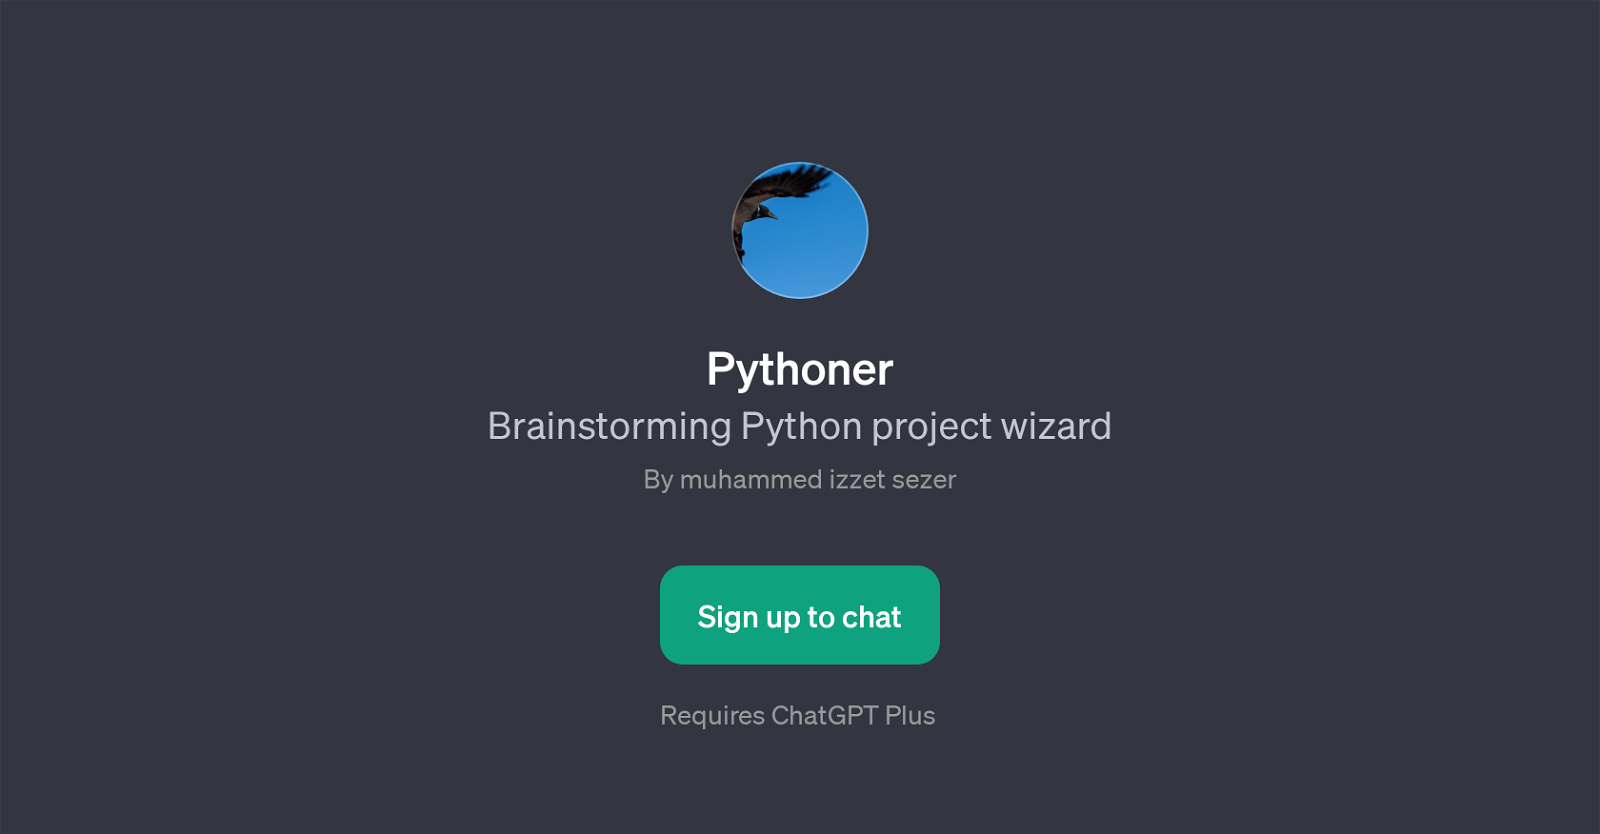 Pythoner website